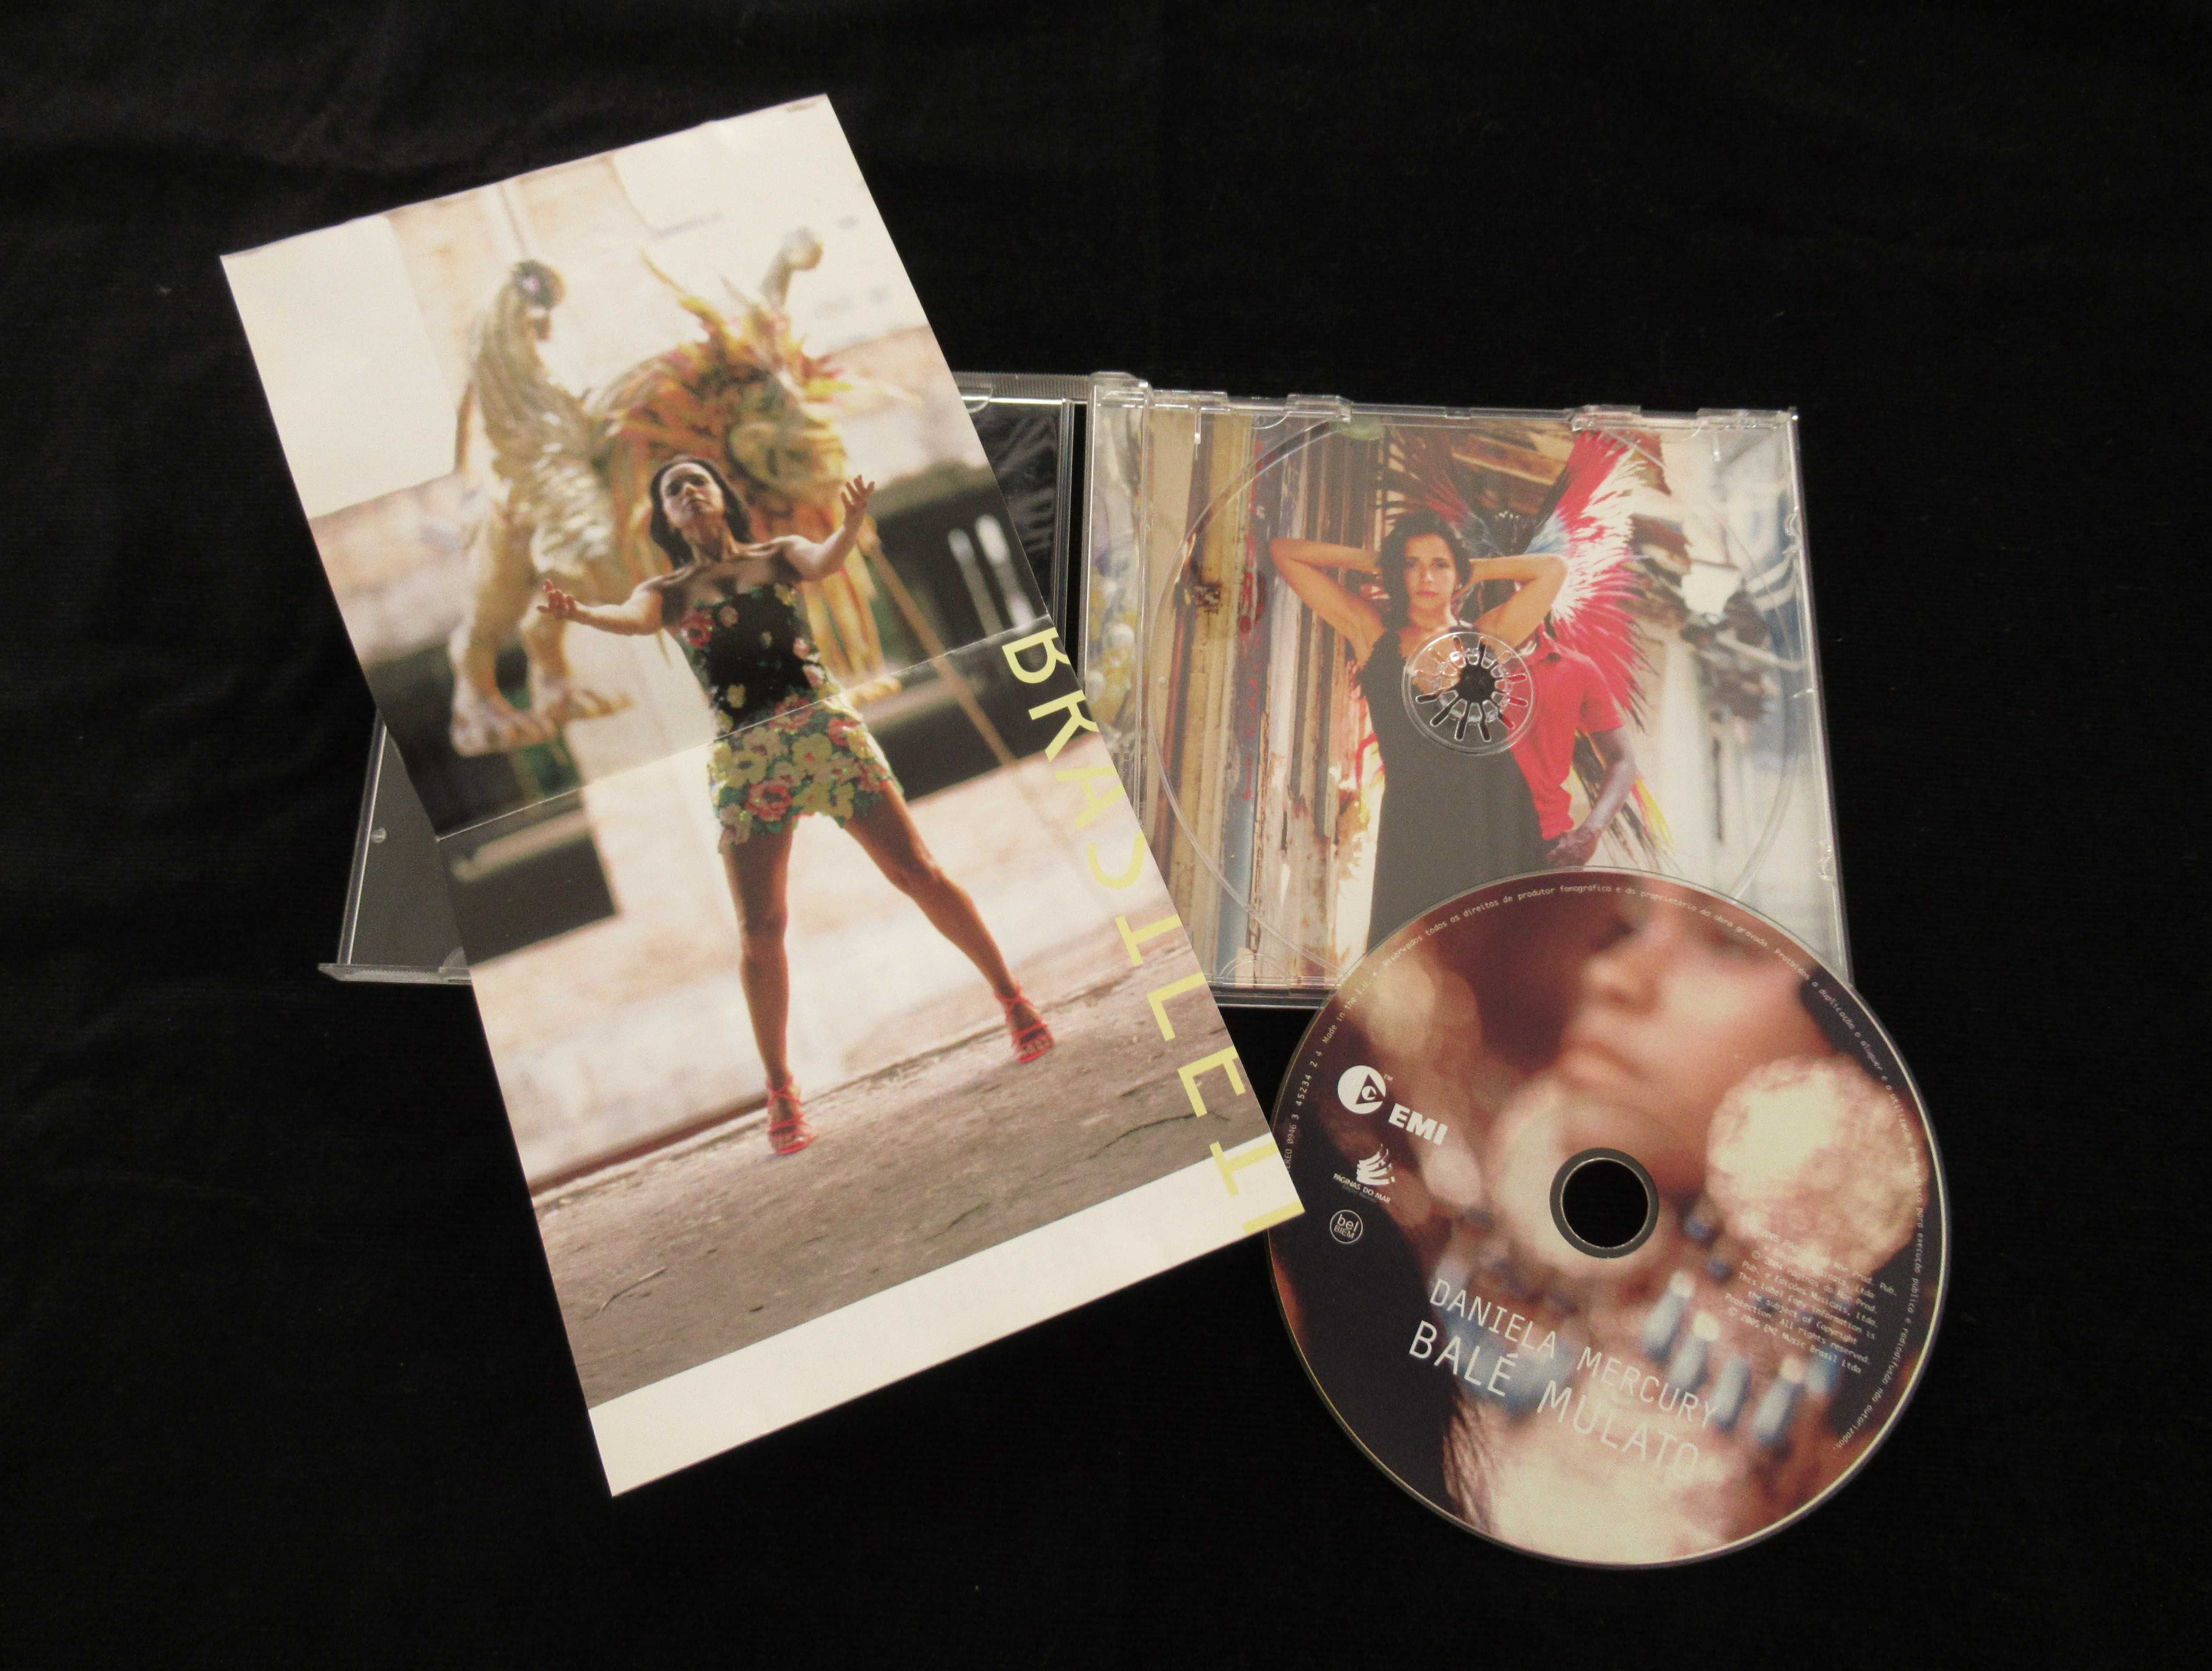 Daniela Mercury - Balé Mulato - CD (Ref. 6)